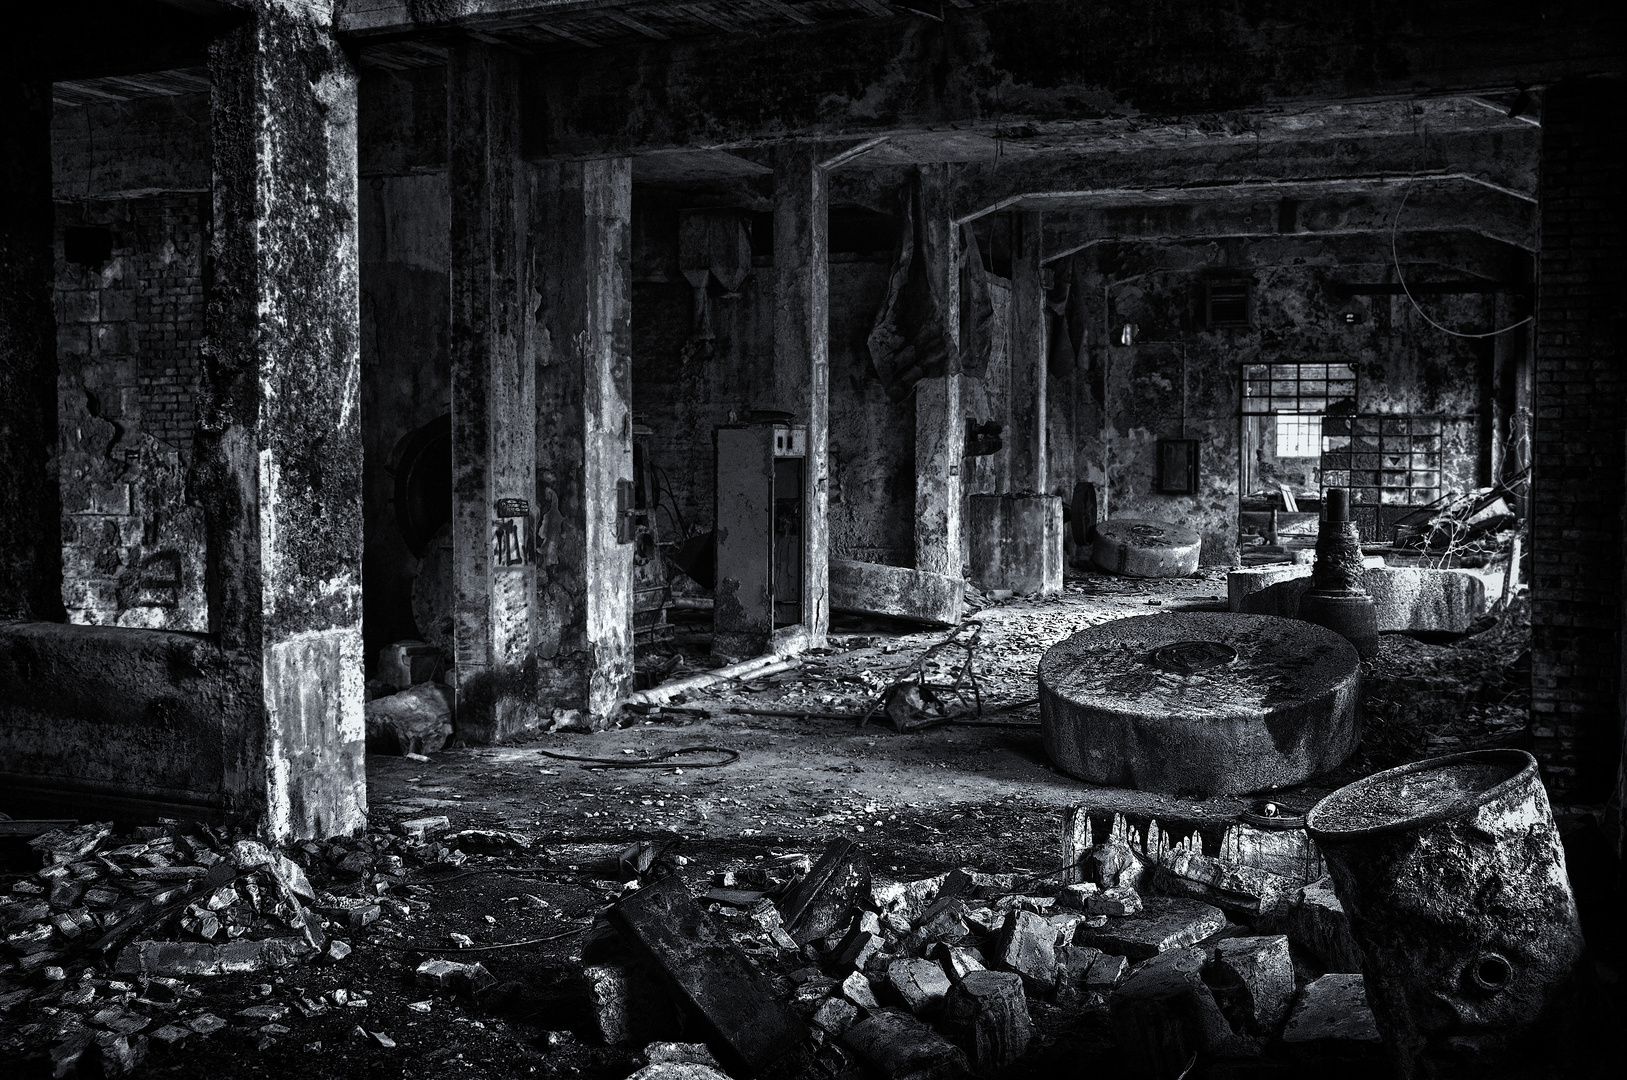 Industrial decay